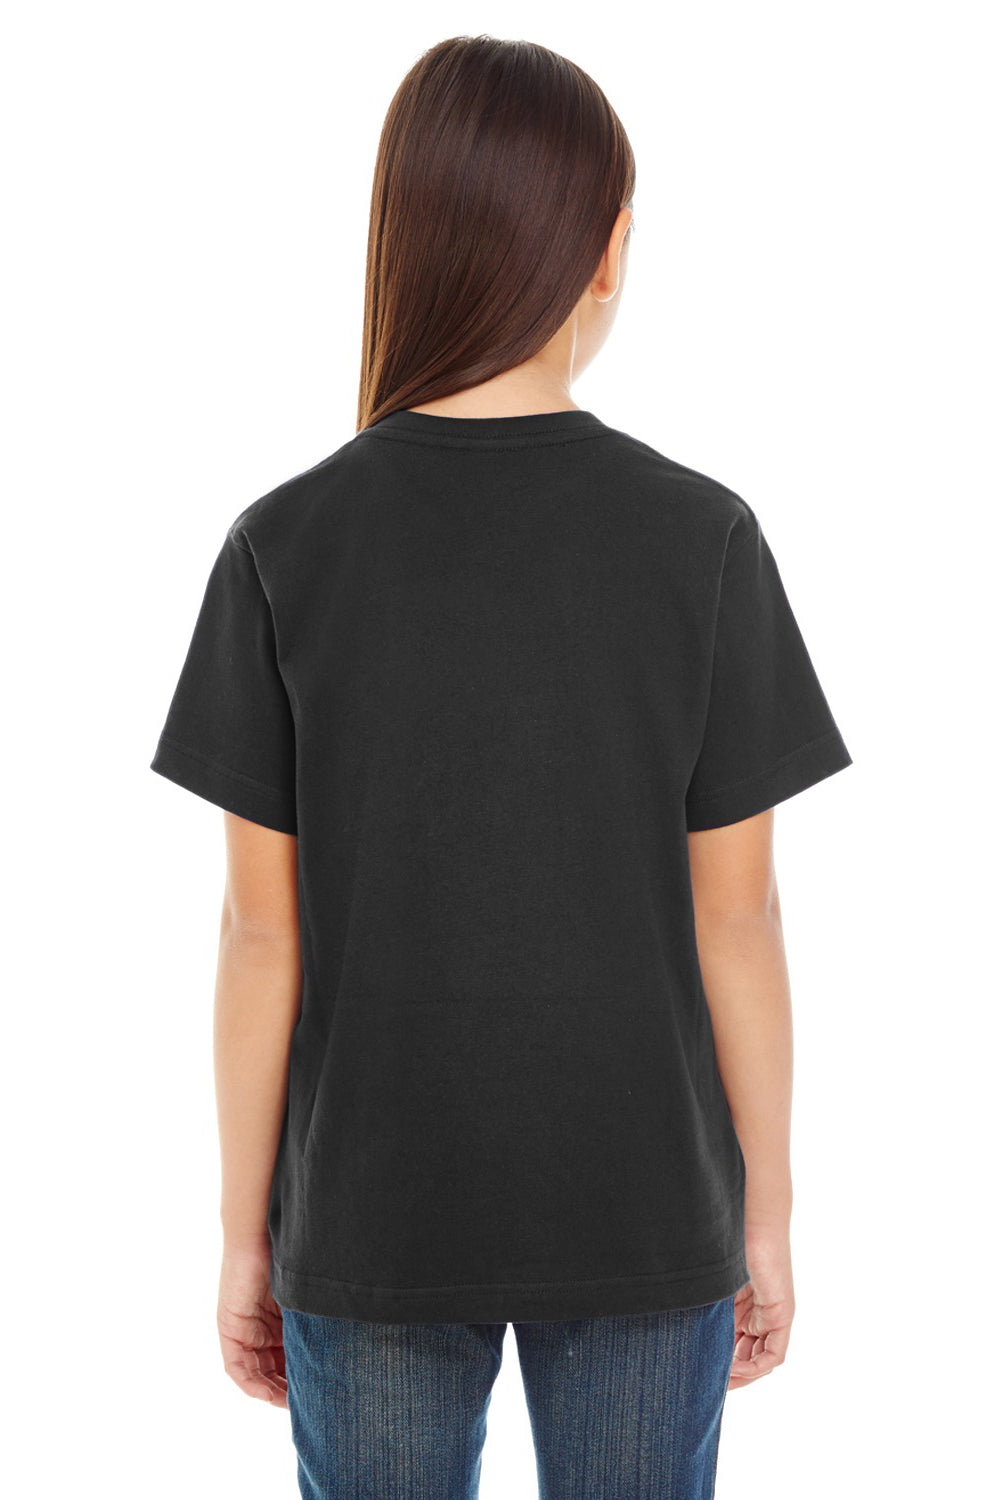 LAT 6180 Youth Premium Jersey Short Sleeve Crewneck T-Shirt Black Back